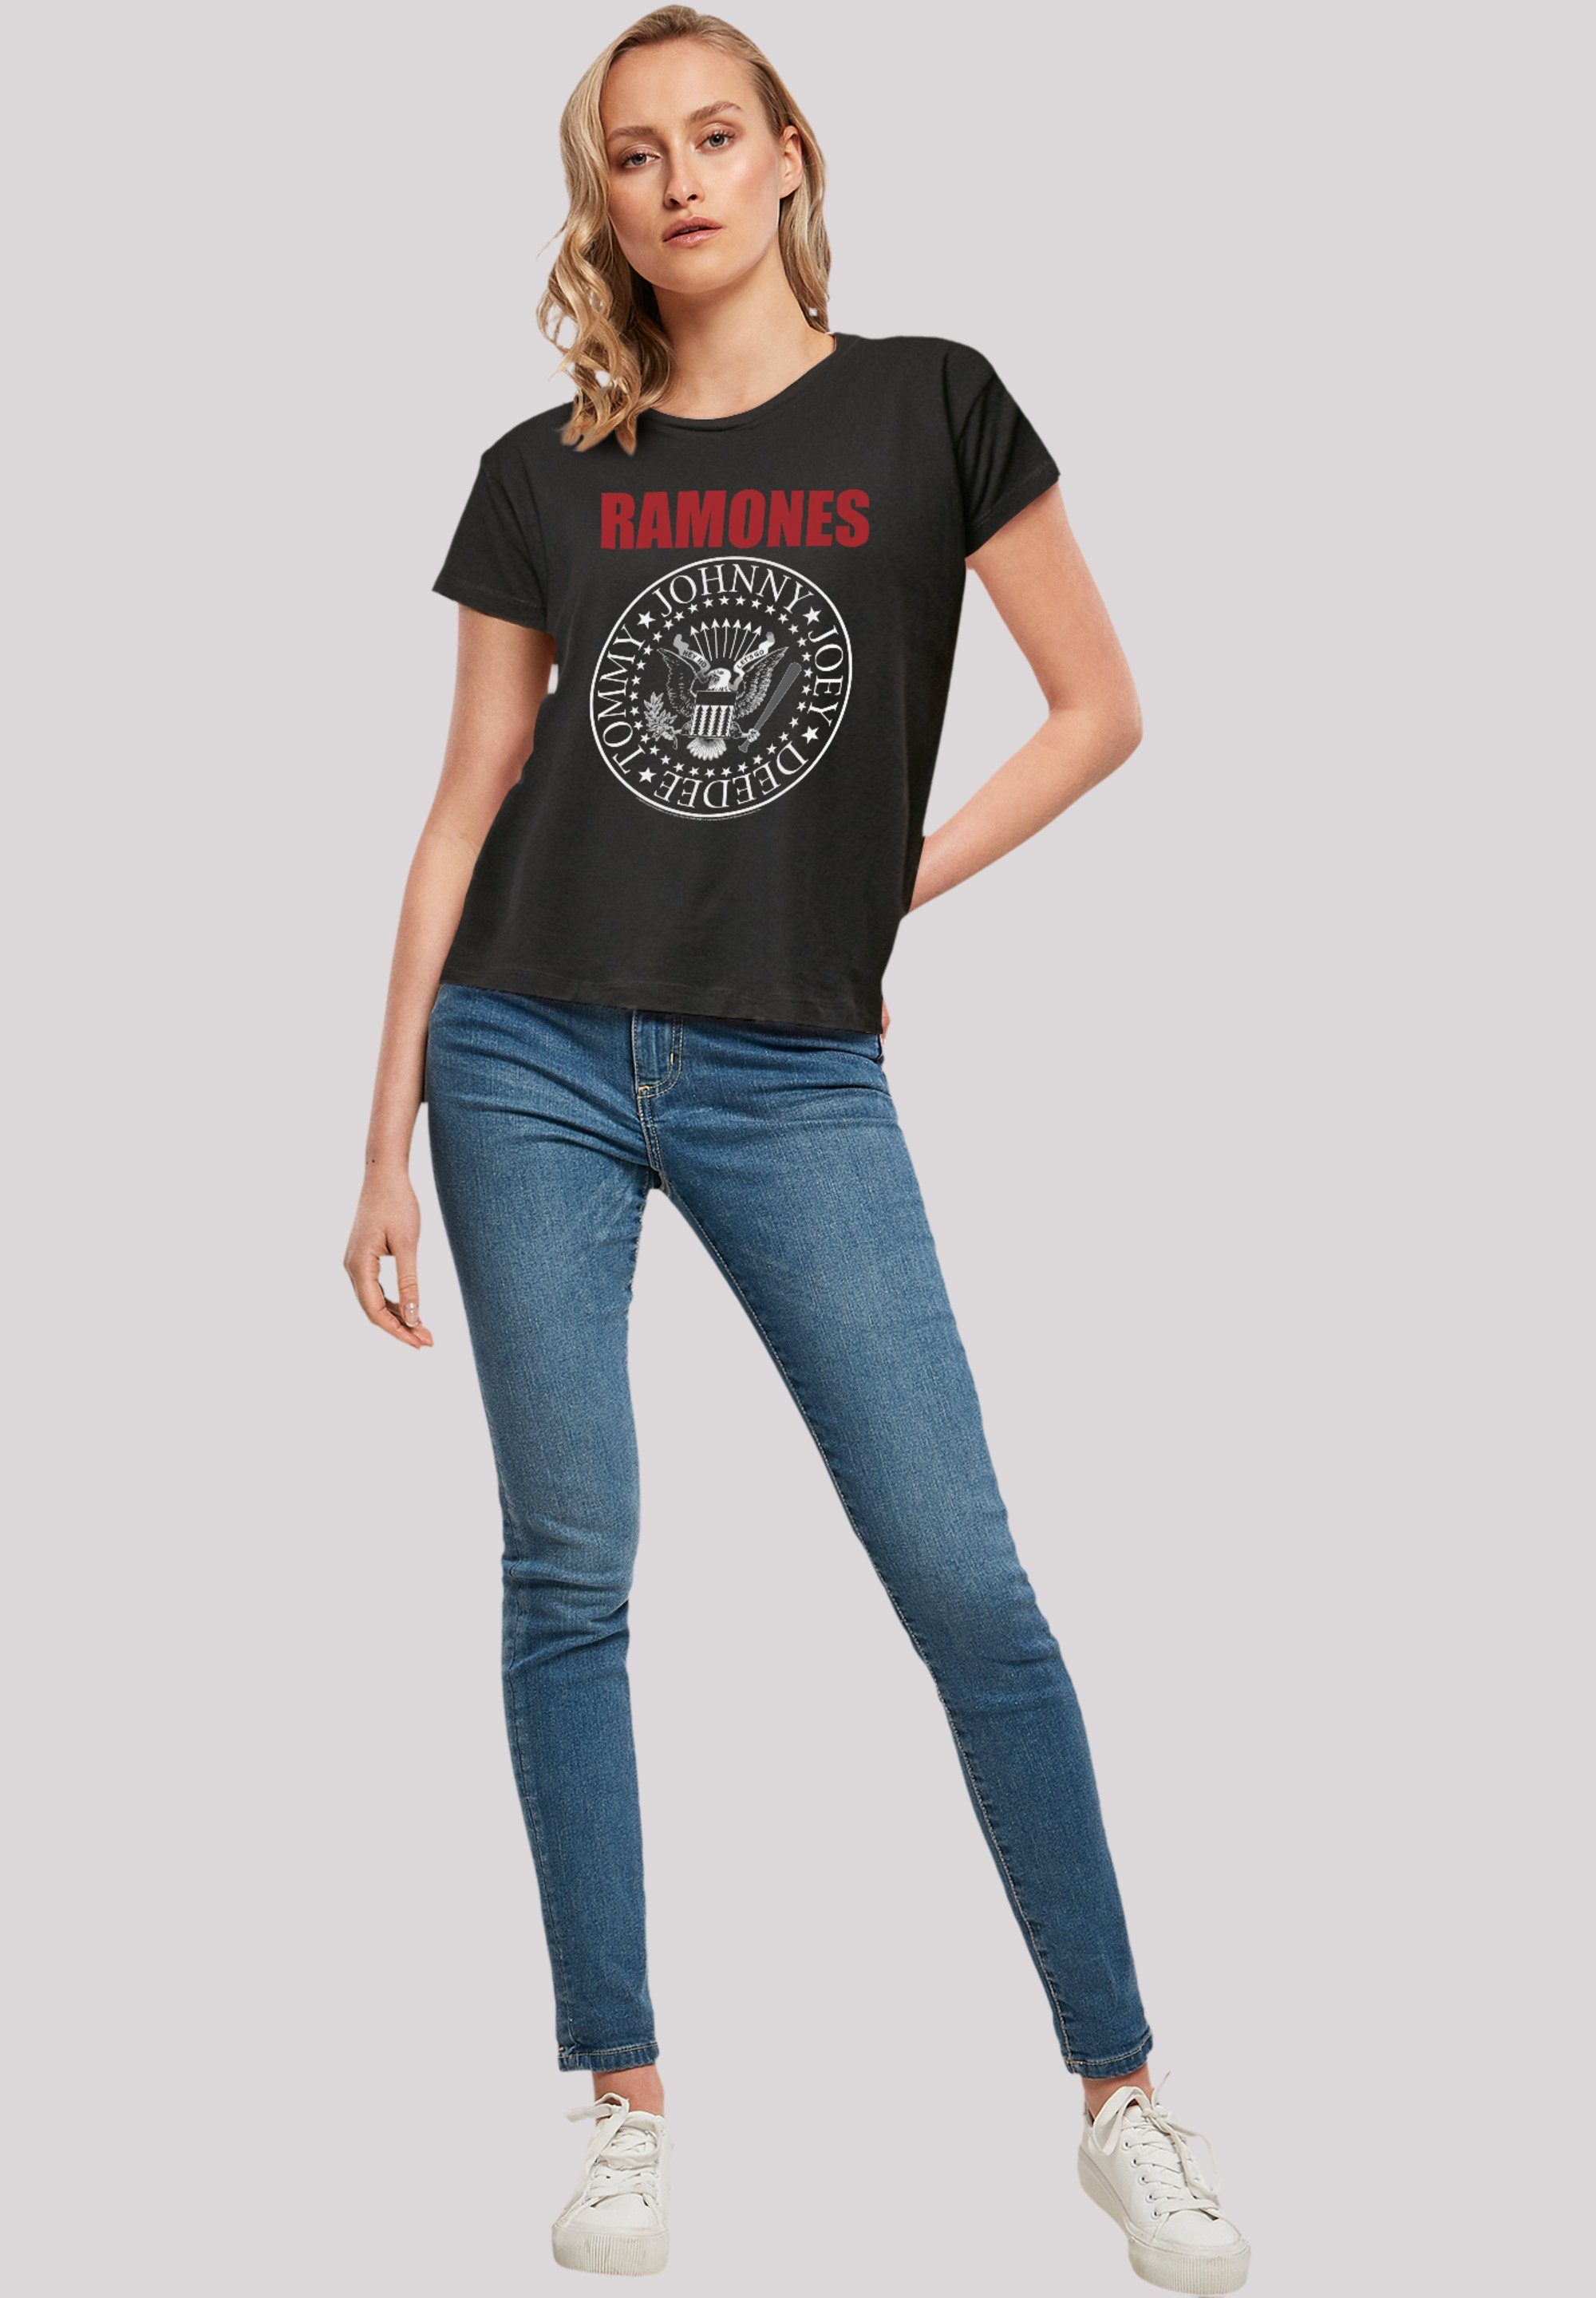 Seal Premium Qualität, T-Shirt Band, Rock Musik Rock-Musik Red Band Ramones Text F4NT4STIC